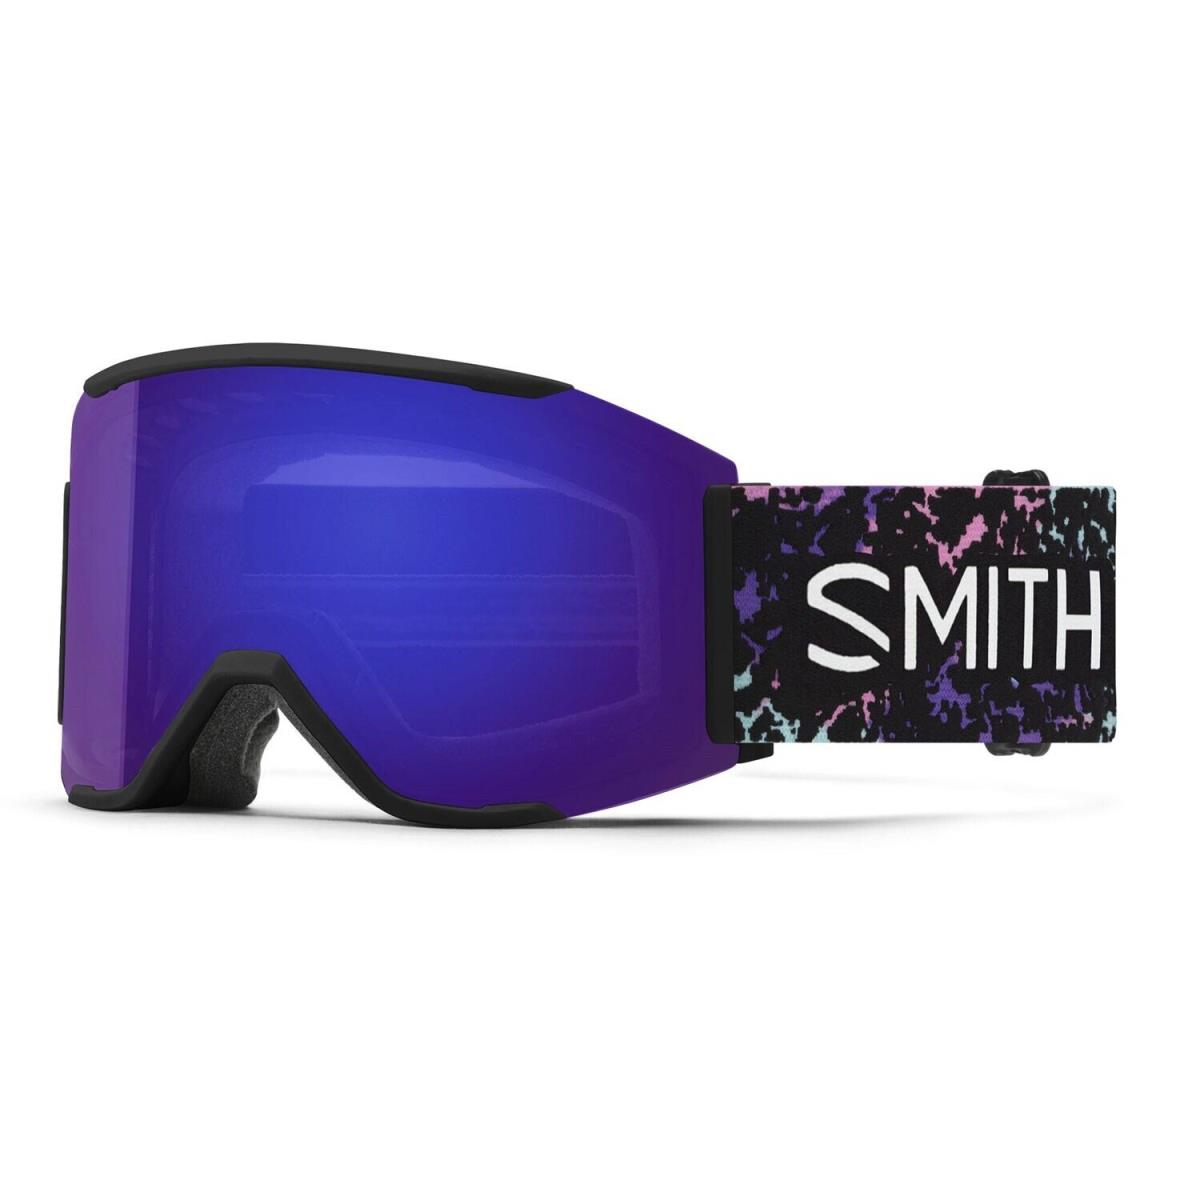 Smith Squad Mag Ski / Snow Goggles Study Hall Everyday Violet Mirror Lens +bonus - Frame: